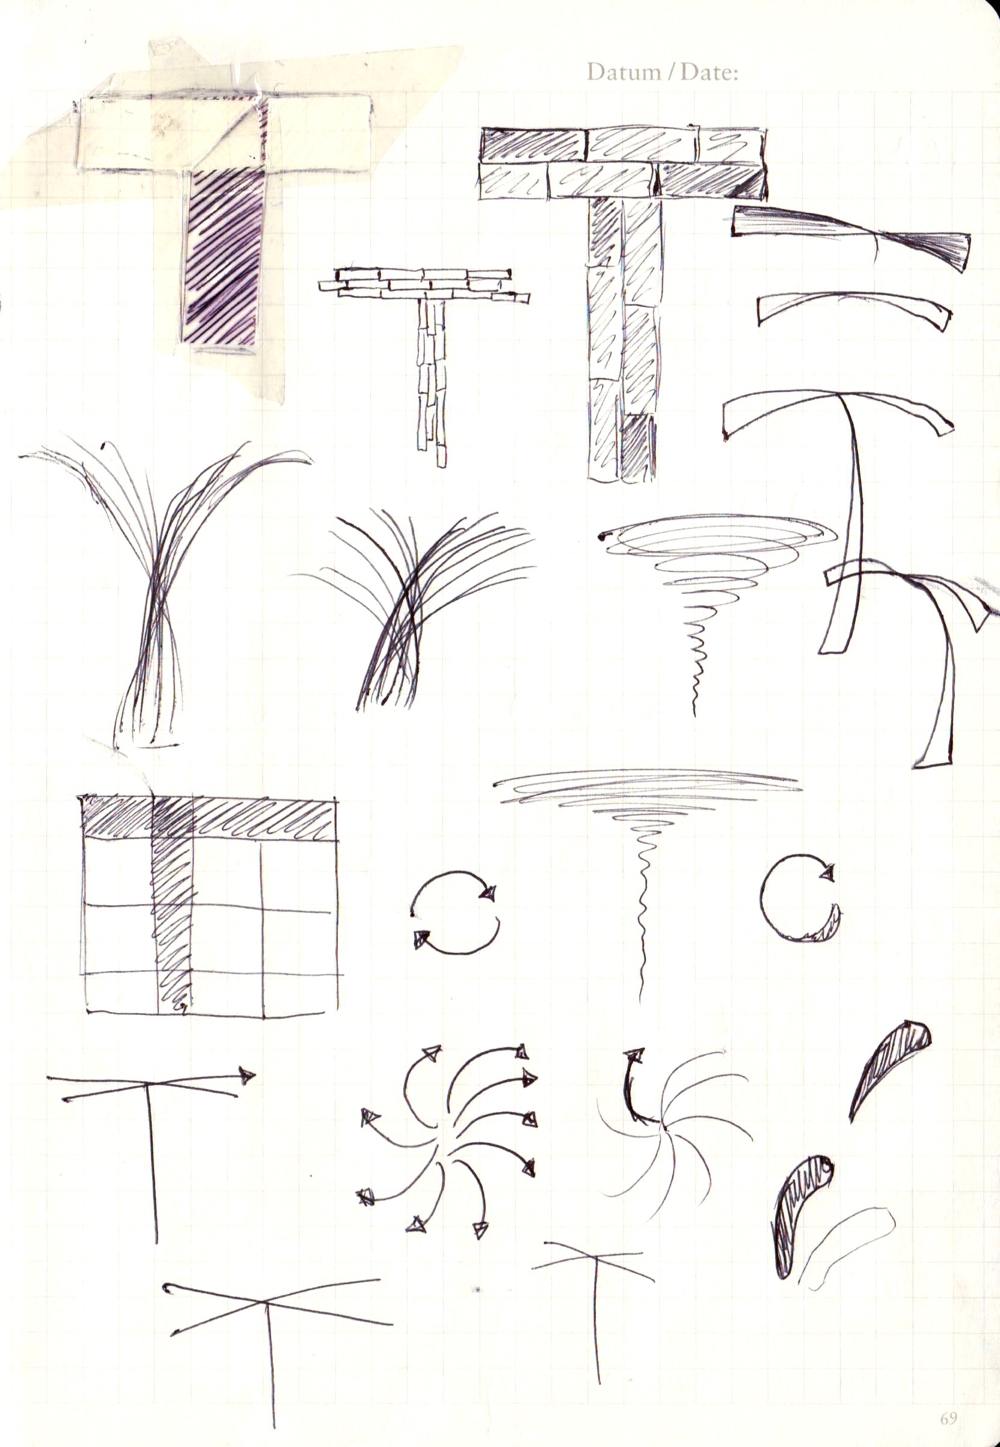 Turbine shape sketches